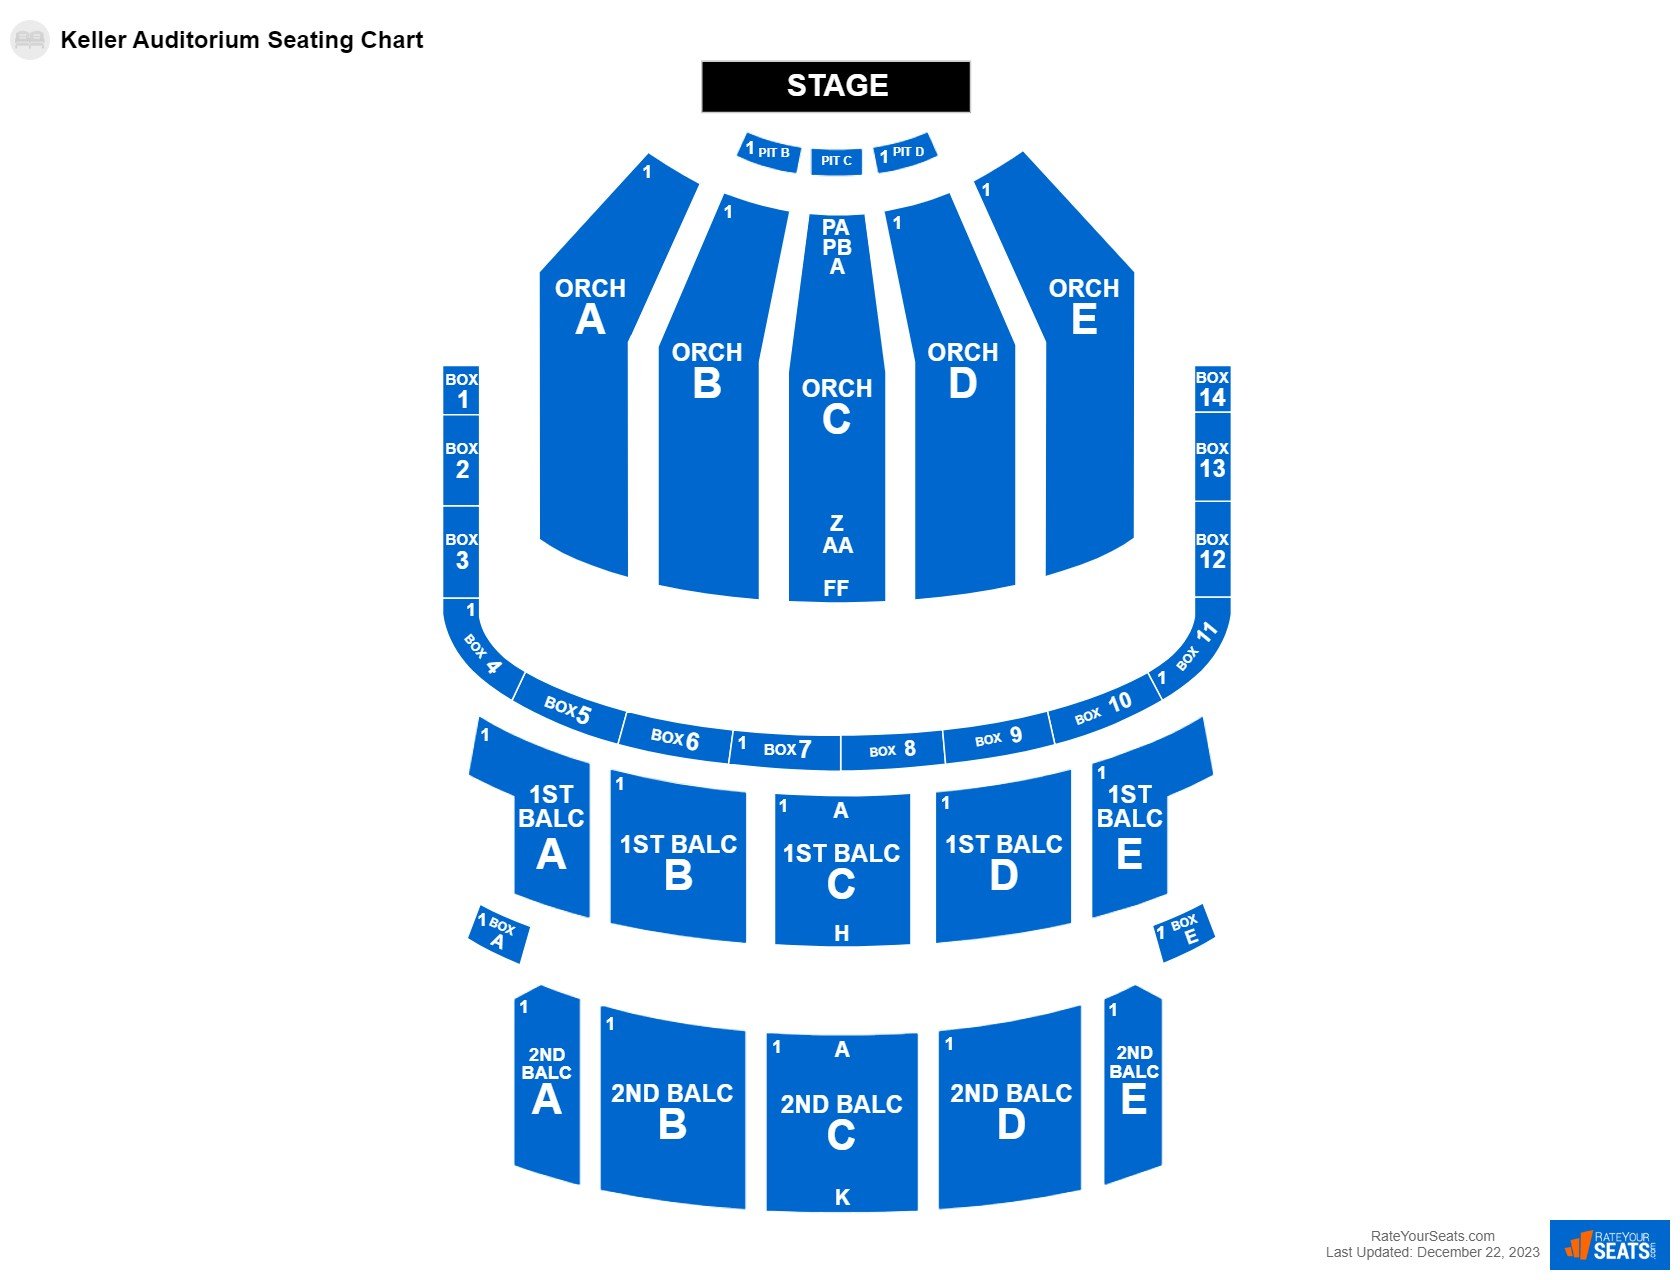 Keller Auditorium Seating Chart - RateYourSeats.com